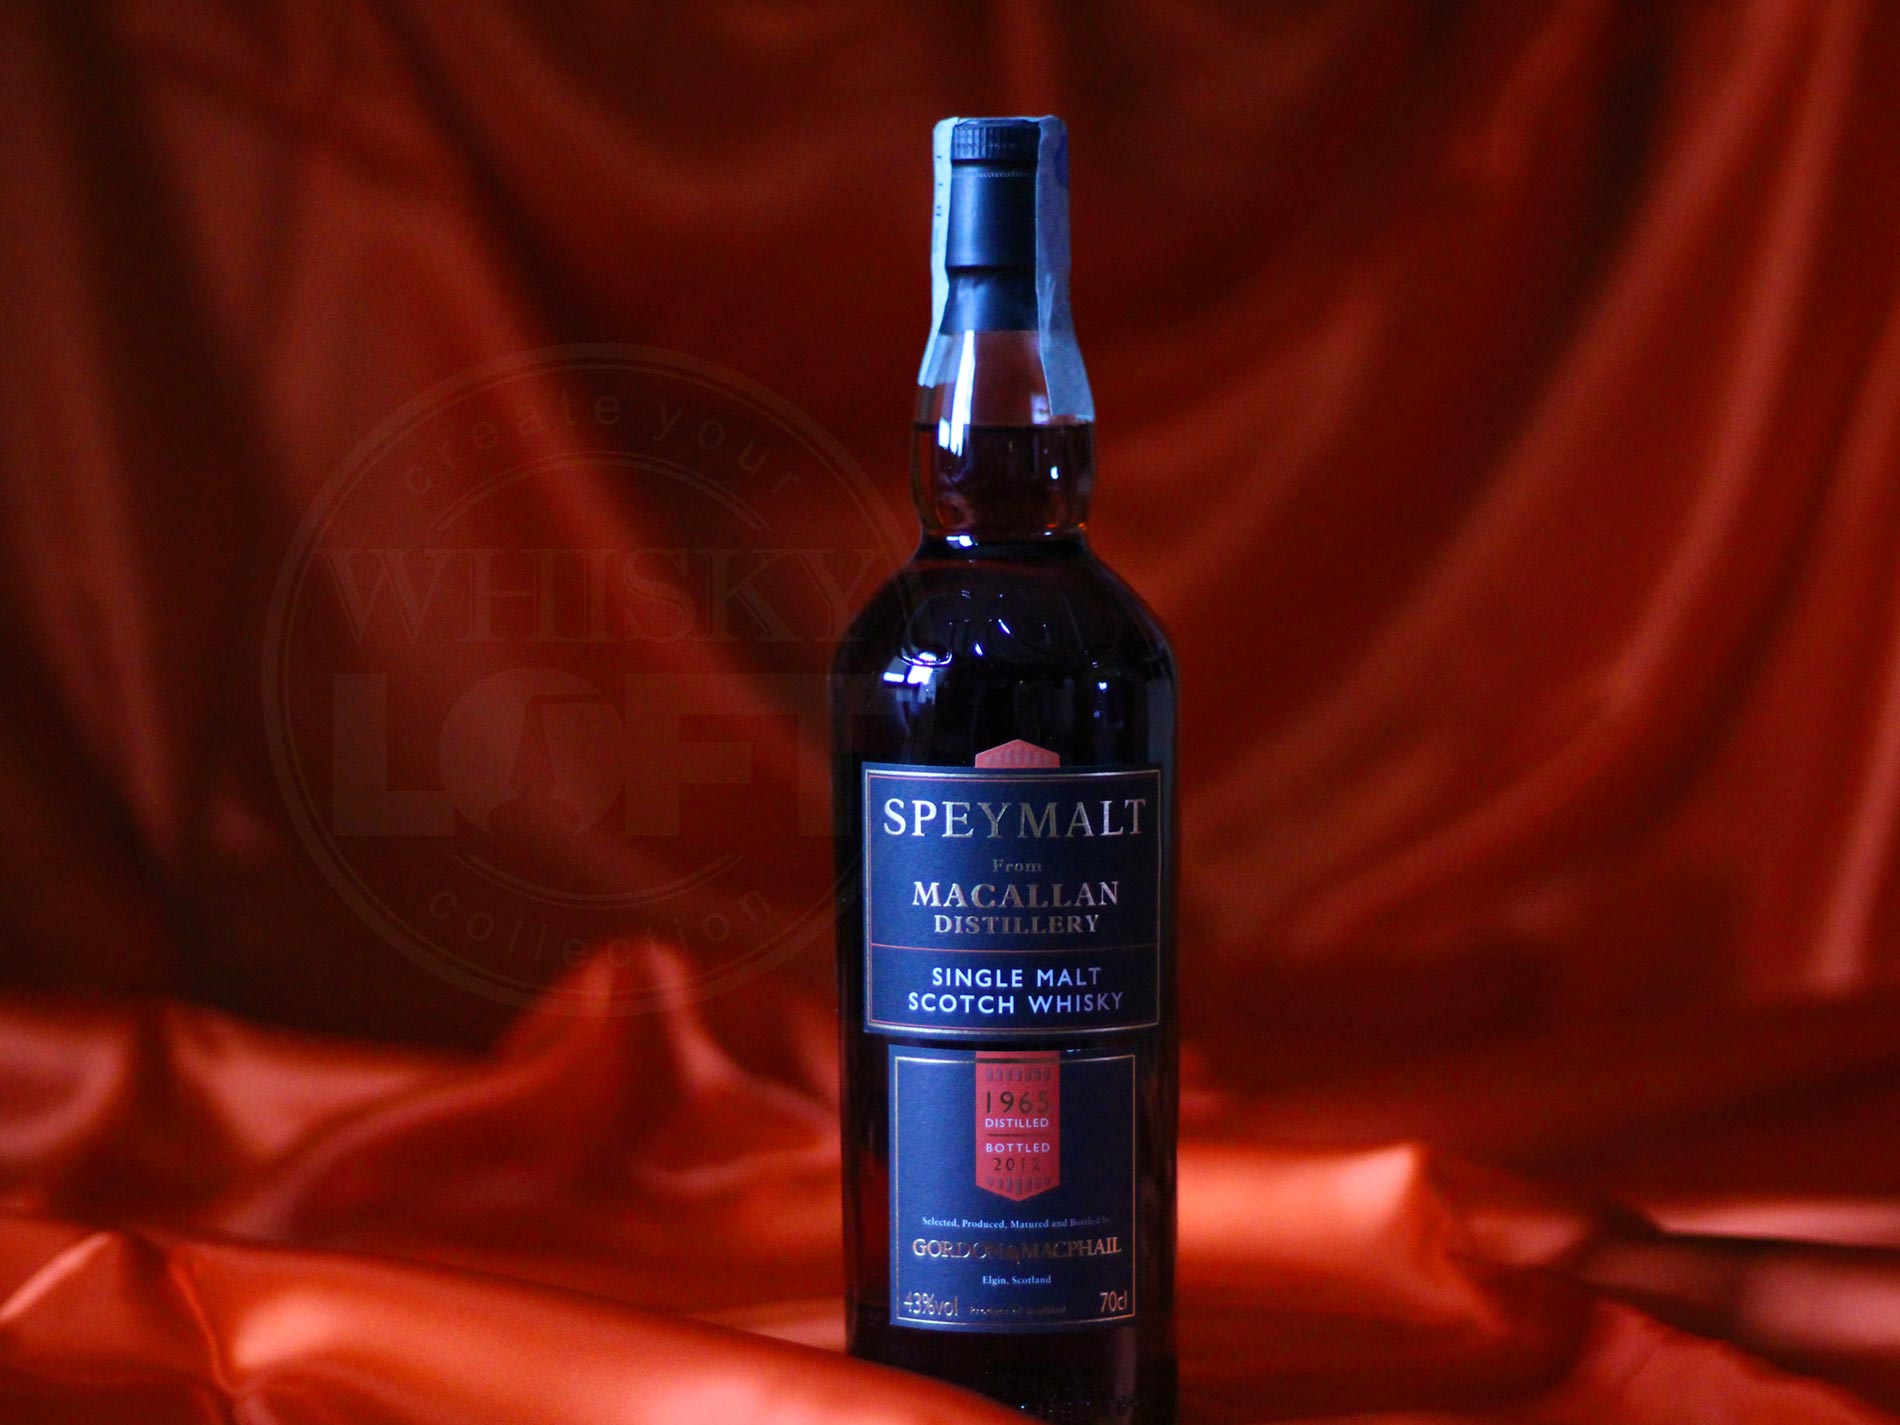 The Macallan, Gordon & MacPhail (GM), Single Malt Scotch Whisky, 1965 distilled.